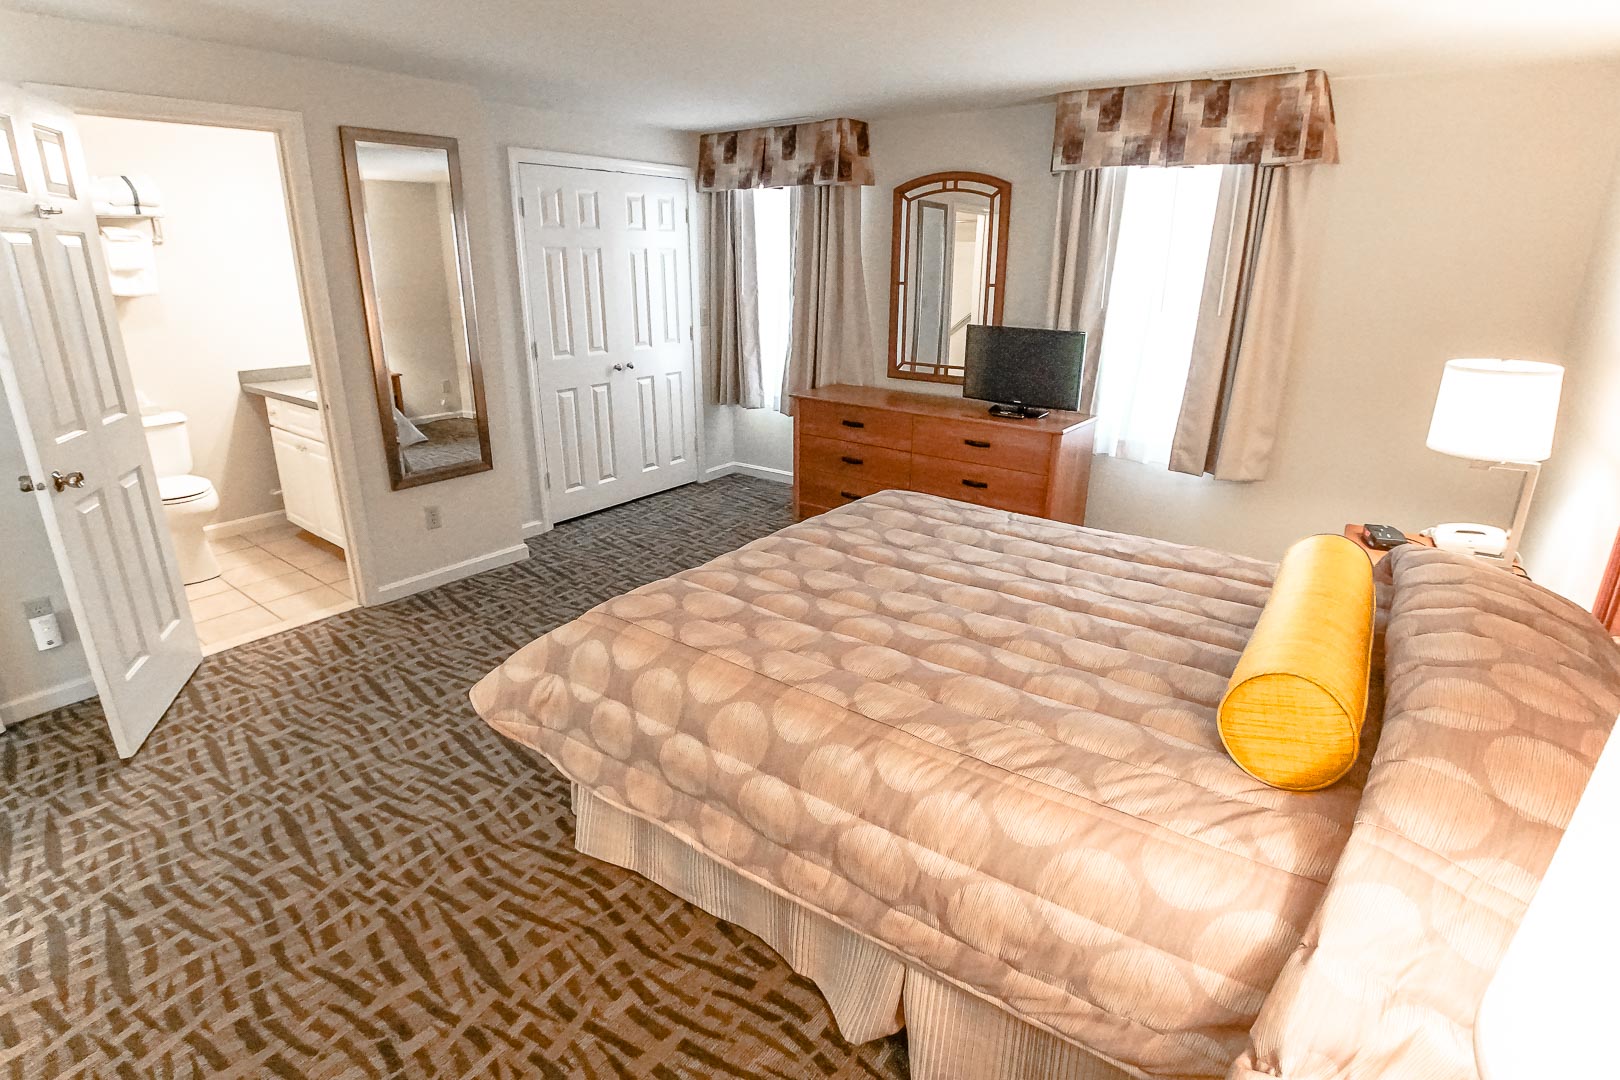 A charming master bedroom at VRI's Sea Mist Resort in Massachusetts.